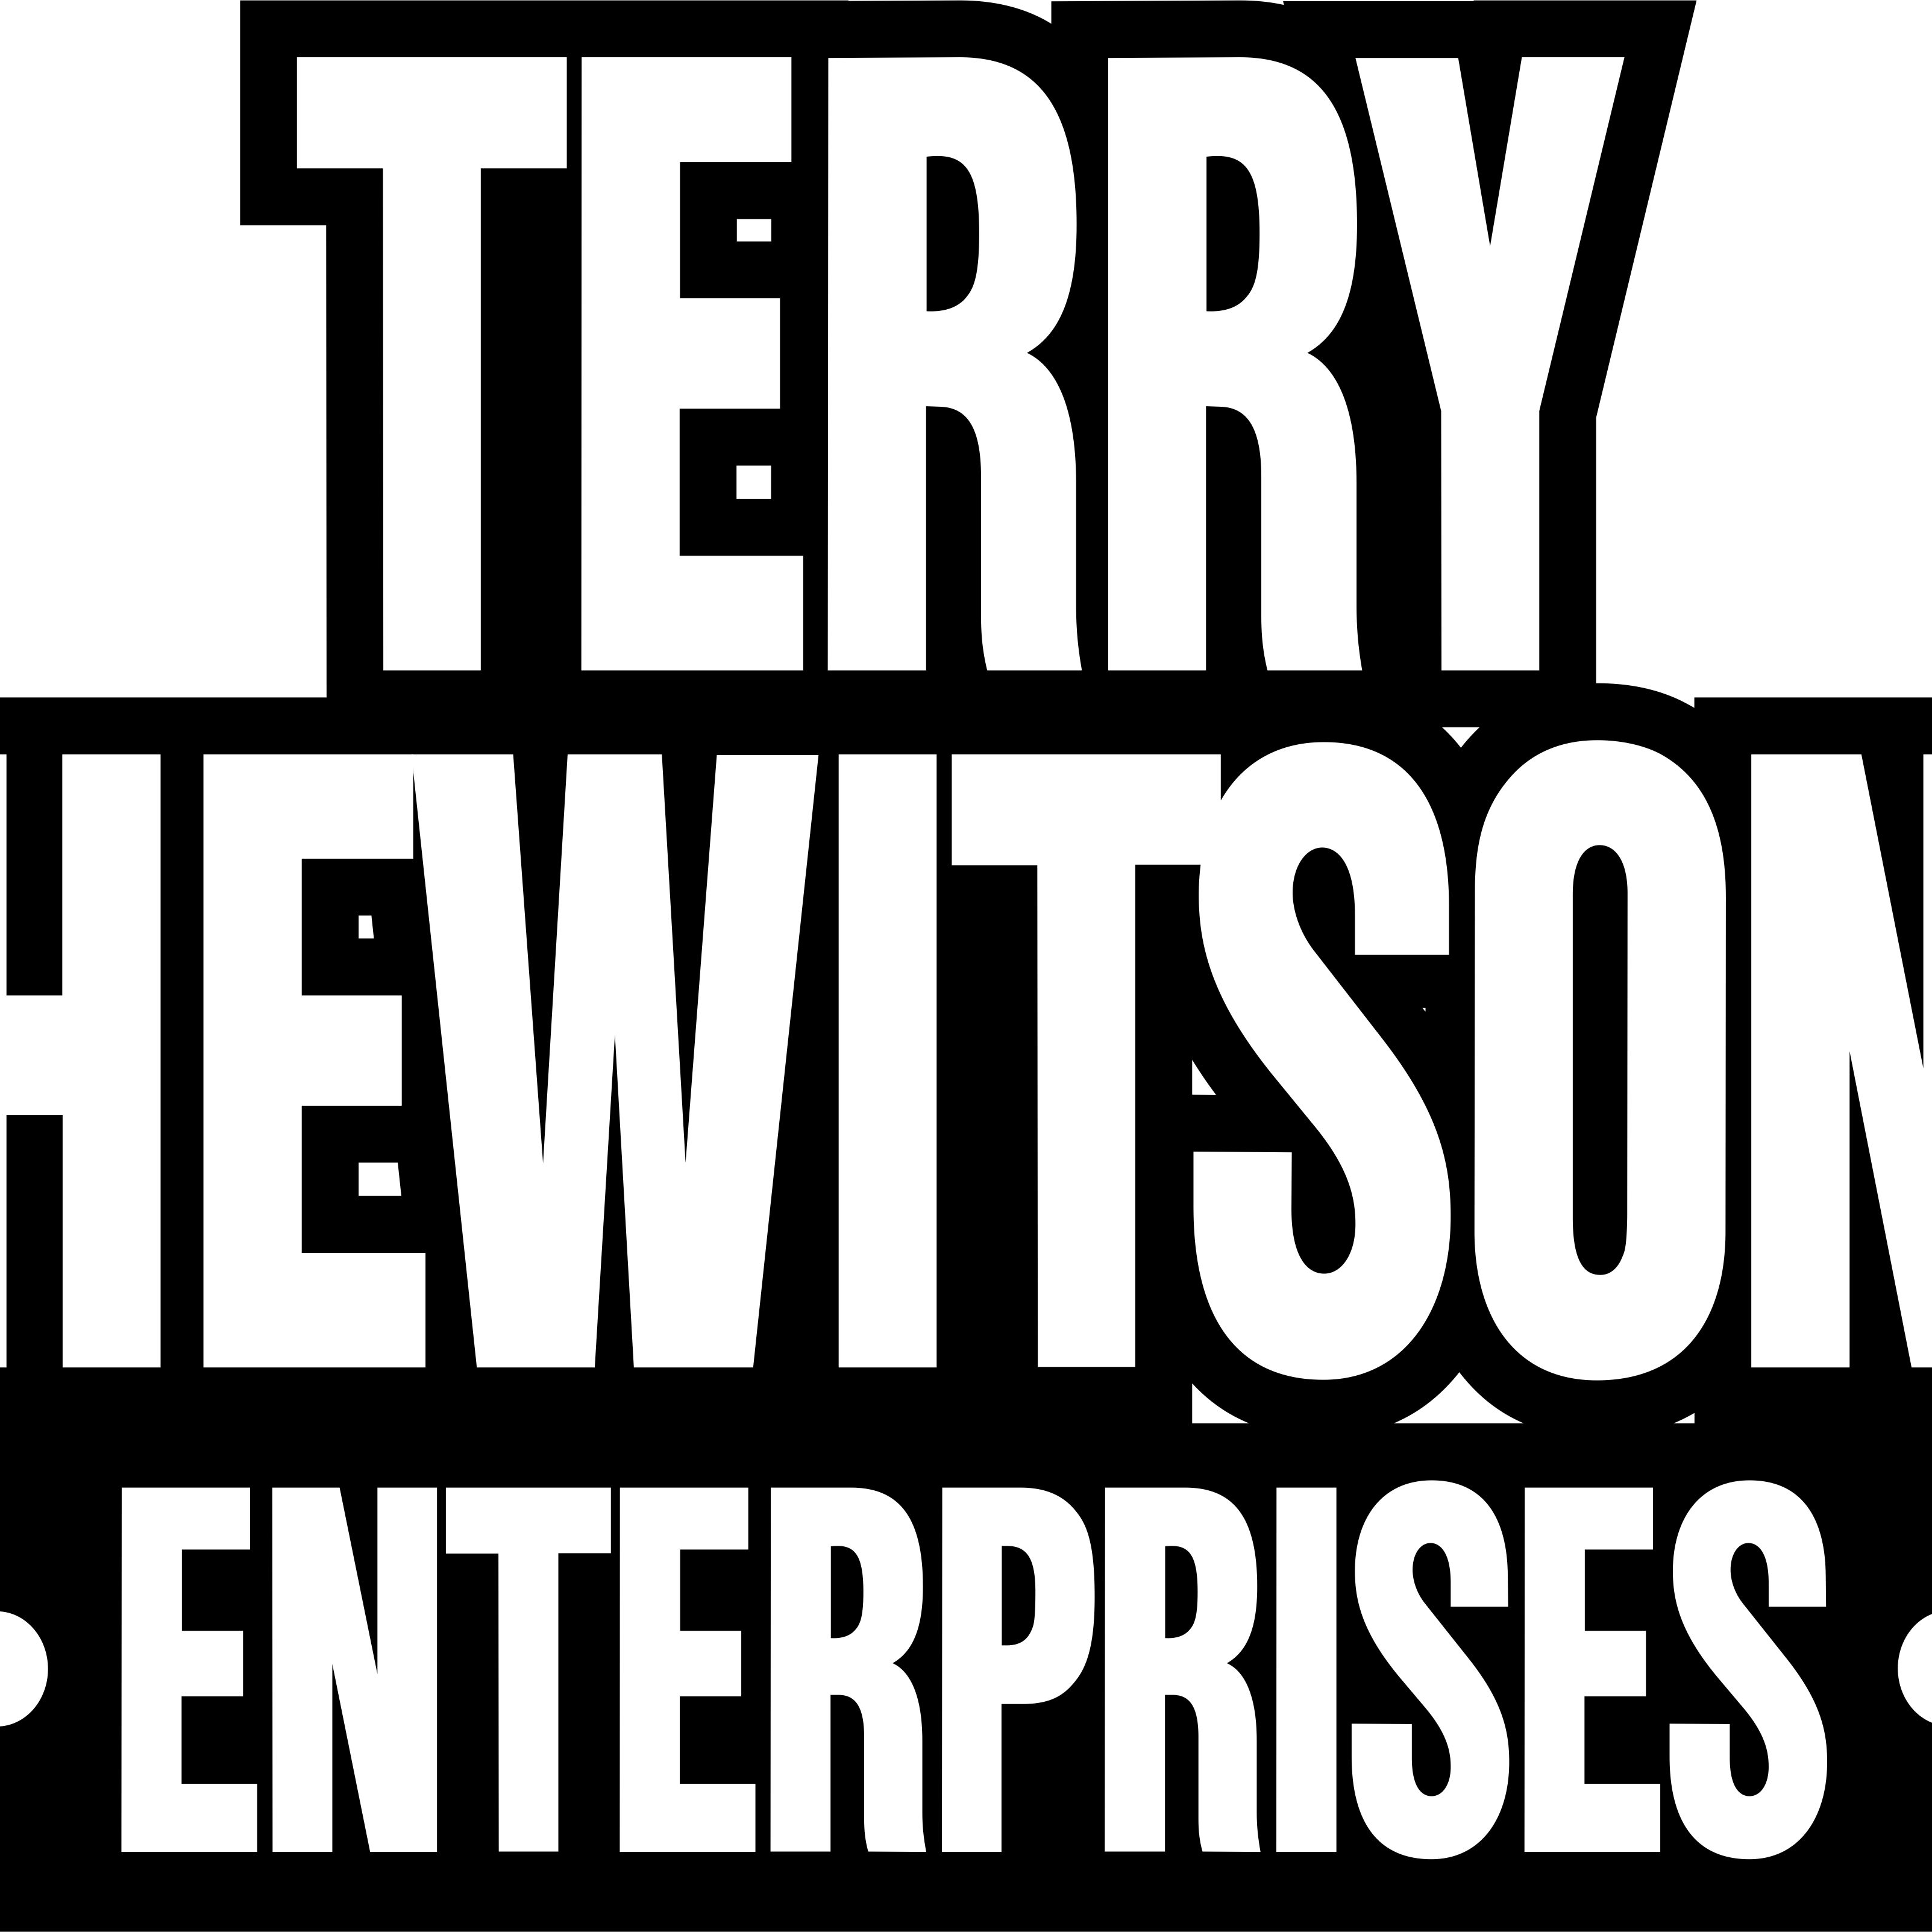 Terry Hewitson Enterprises